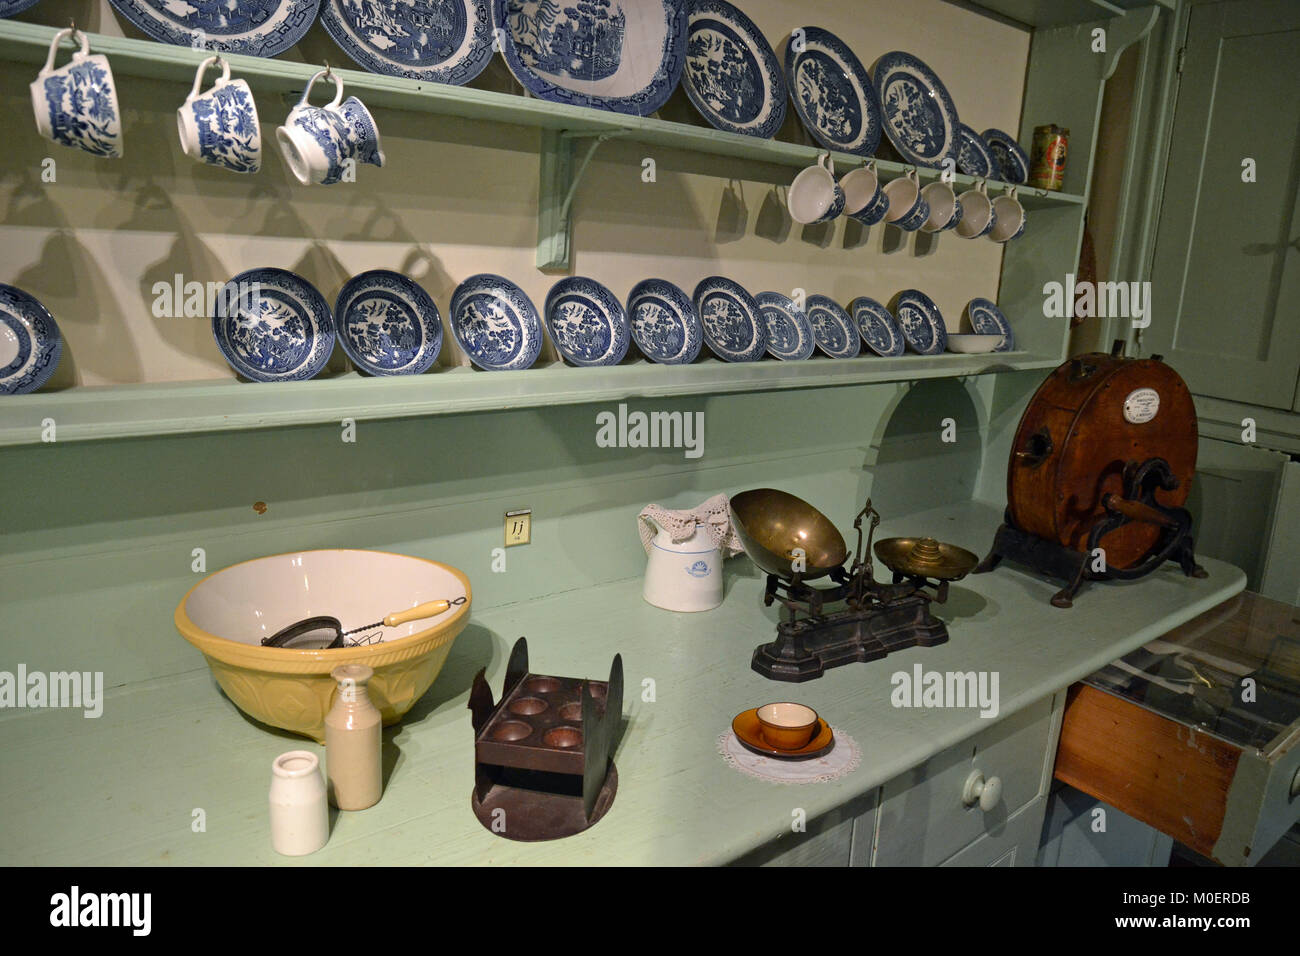 https://c8.alamy.com/comp/M0ERDB/display-of-crockery-on-shelves-in-the-kitchen-at-wycombe-museum-high-M0ERDB.jpg